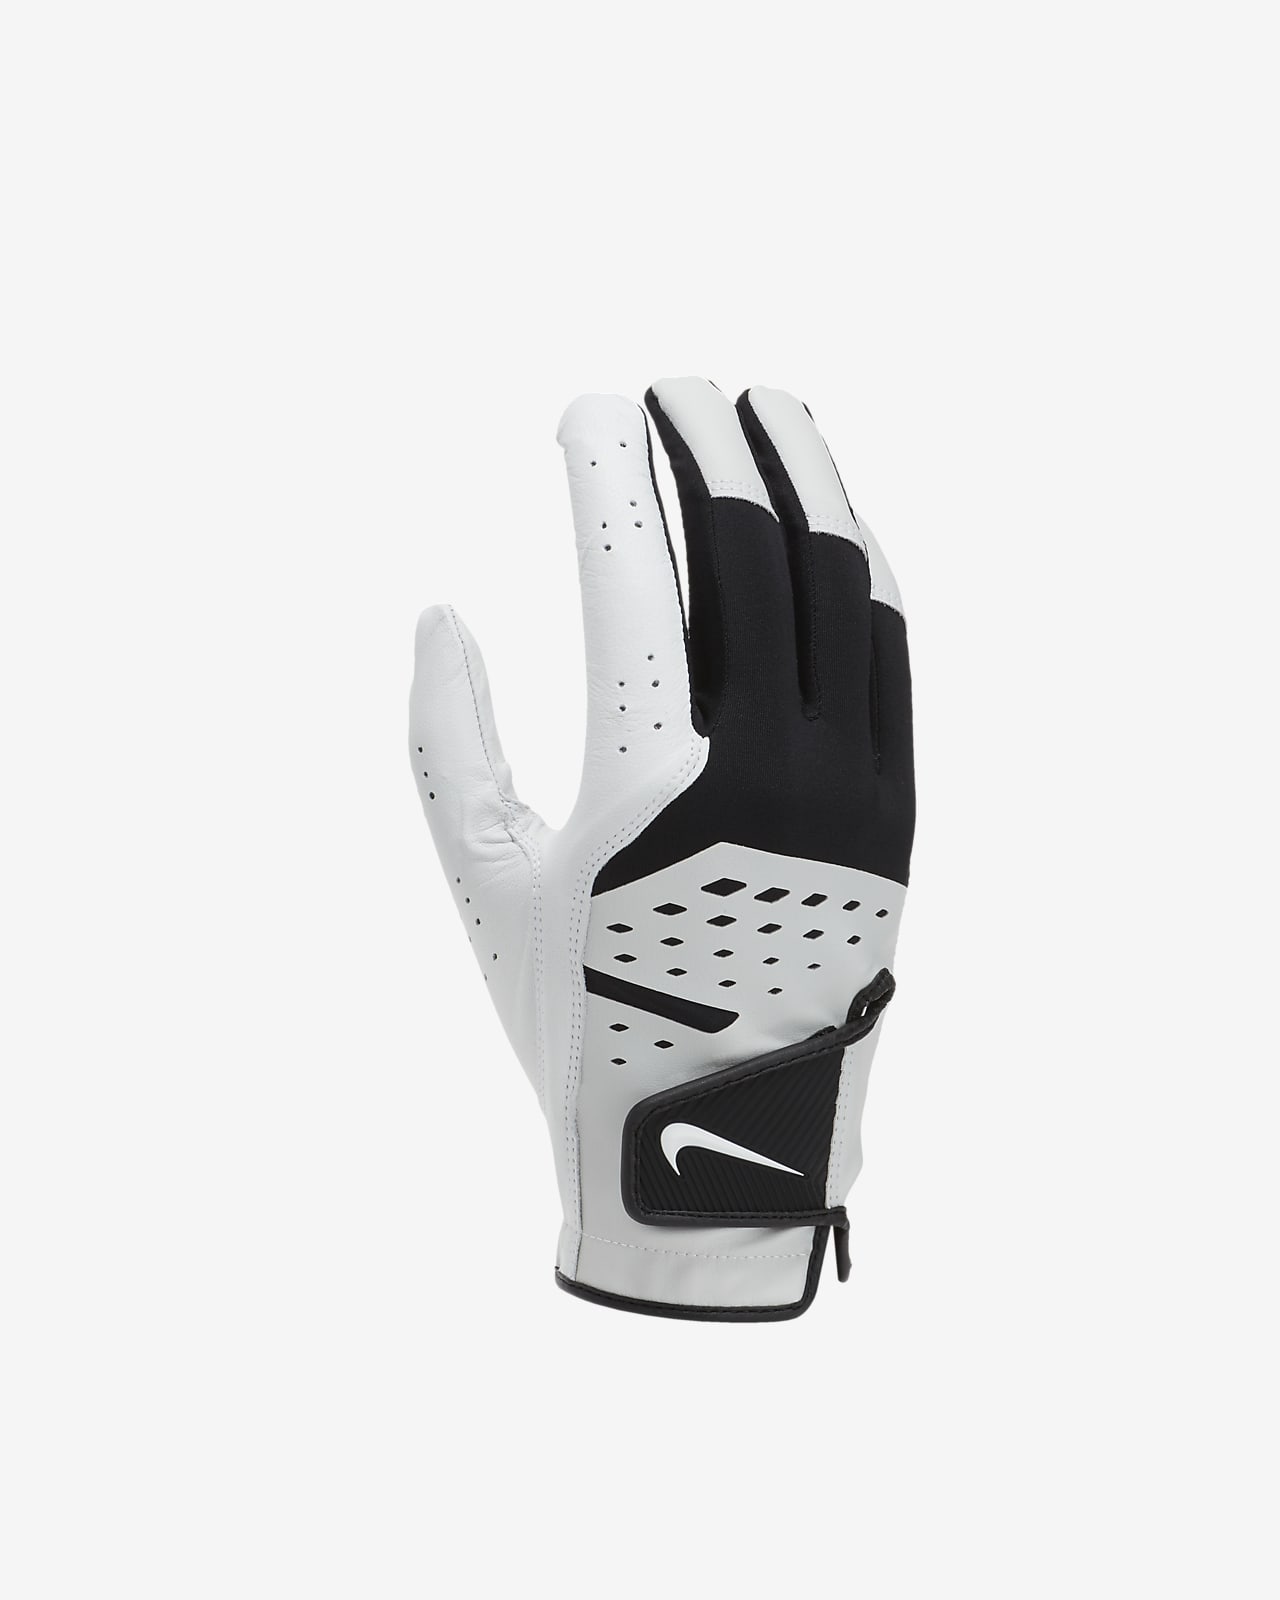 Nike Tech Extreme VII Golf Glove (Right Regular)